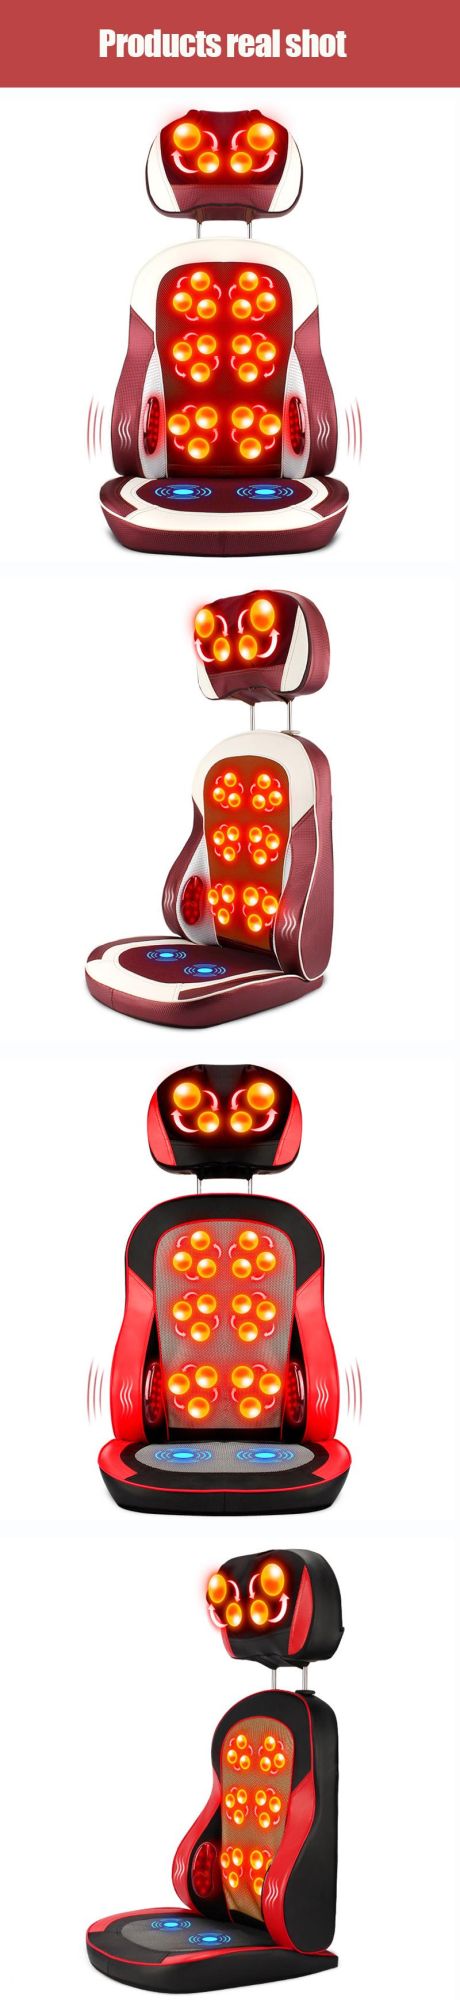 Factory Sale Chair Massage Pad Back Vibration Shiatsu Massaging Cushion Seat Car Home Massage Cushion